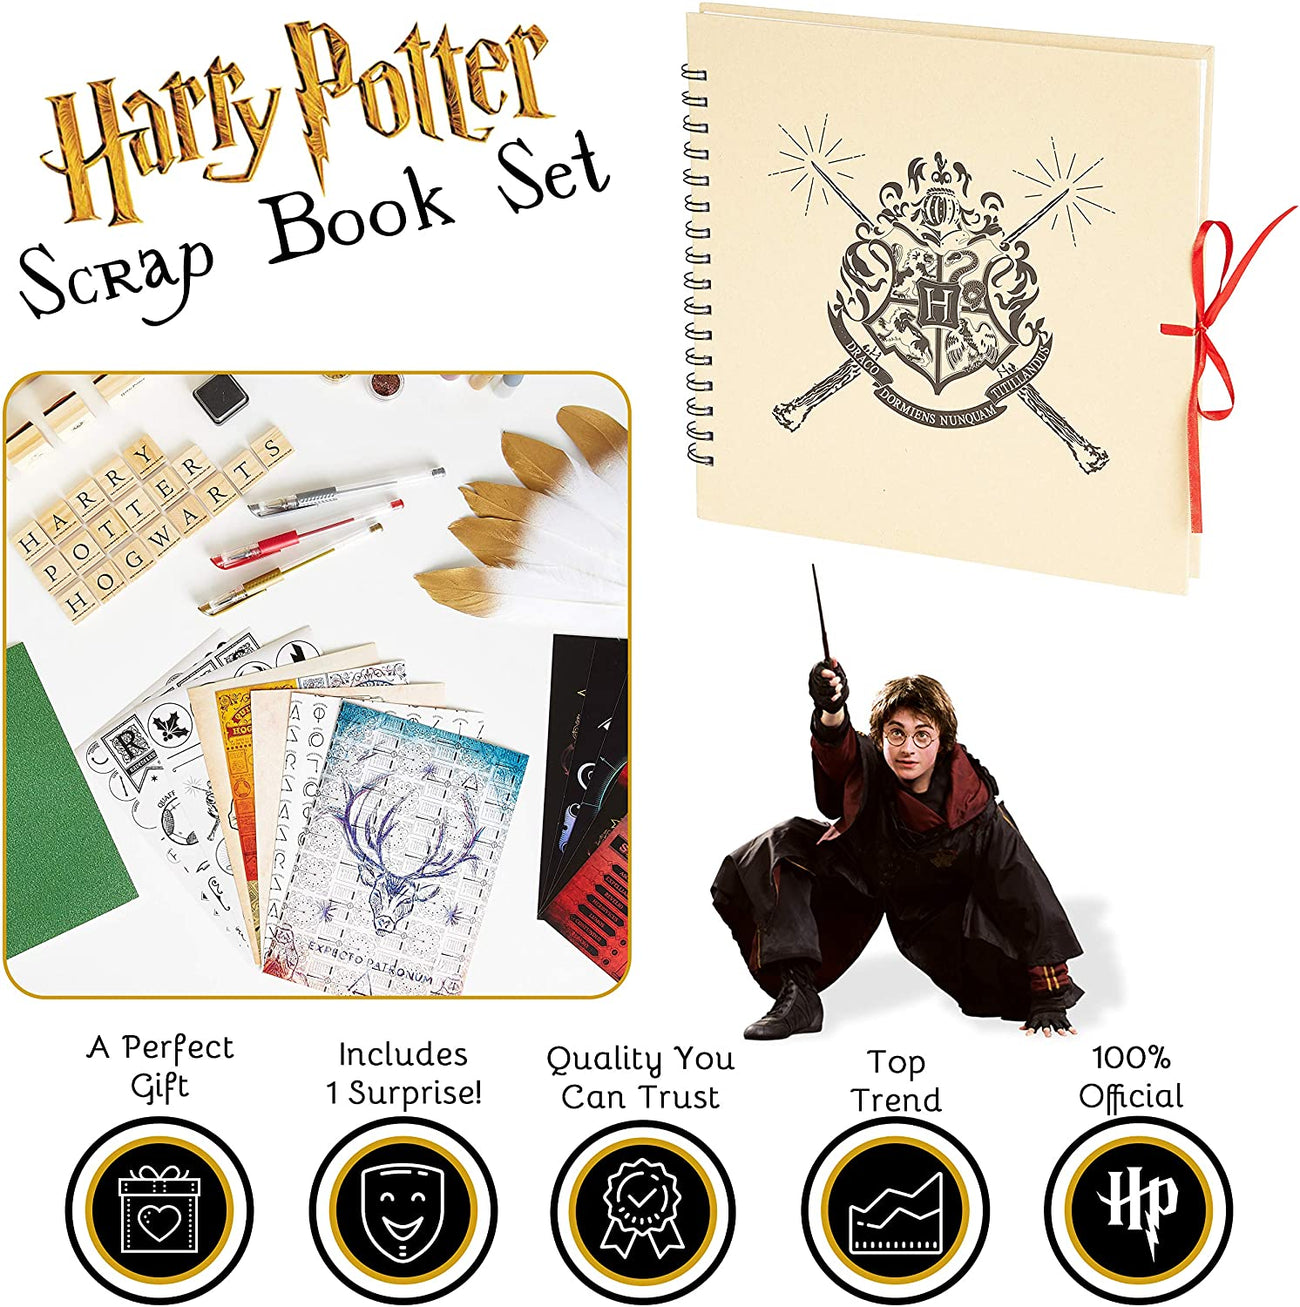 A Scrapjourney: Harry Potter Scrapbooking